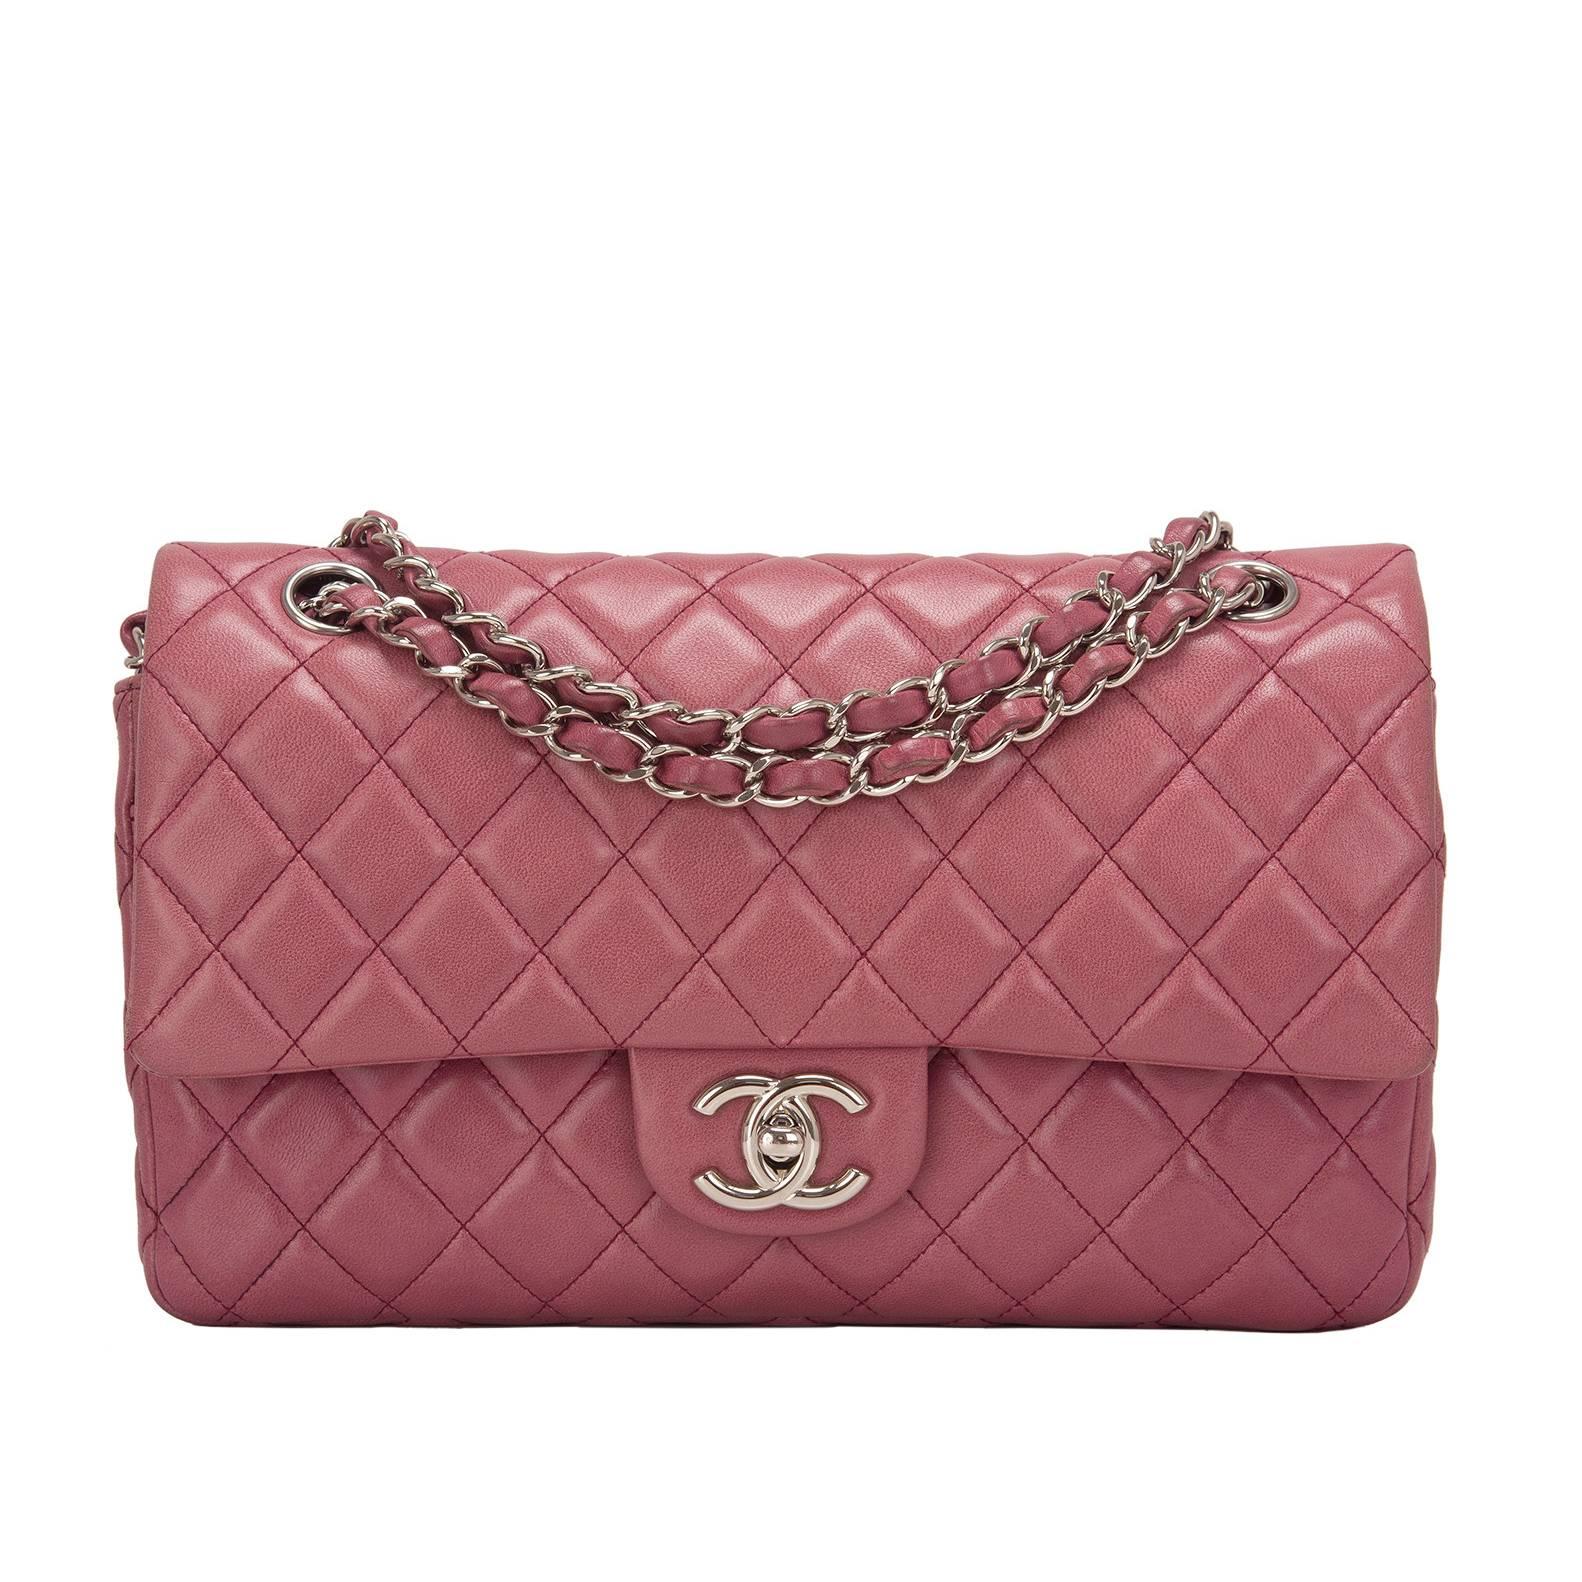 Chanel Rose Fonce Lambskin Medium Classic Double Flap Bag